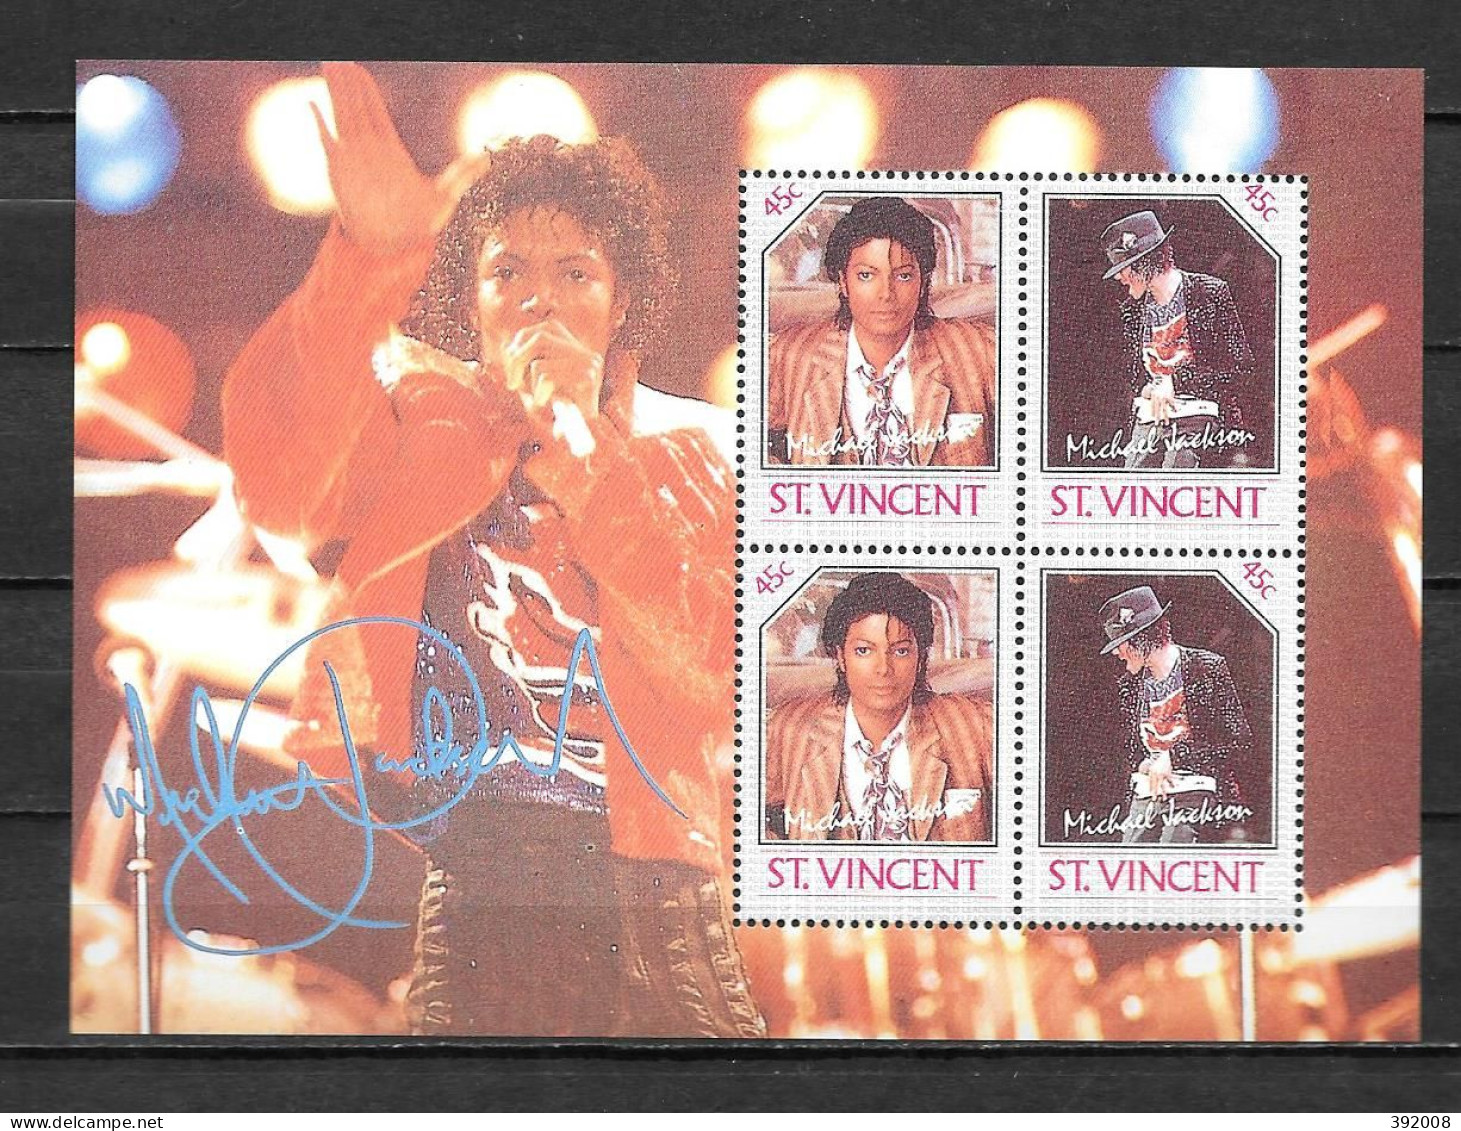 Michael Jackson - ST Vincent BF 633 **MNH - D4/1 - Sänger